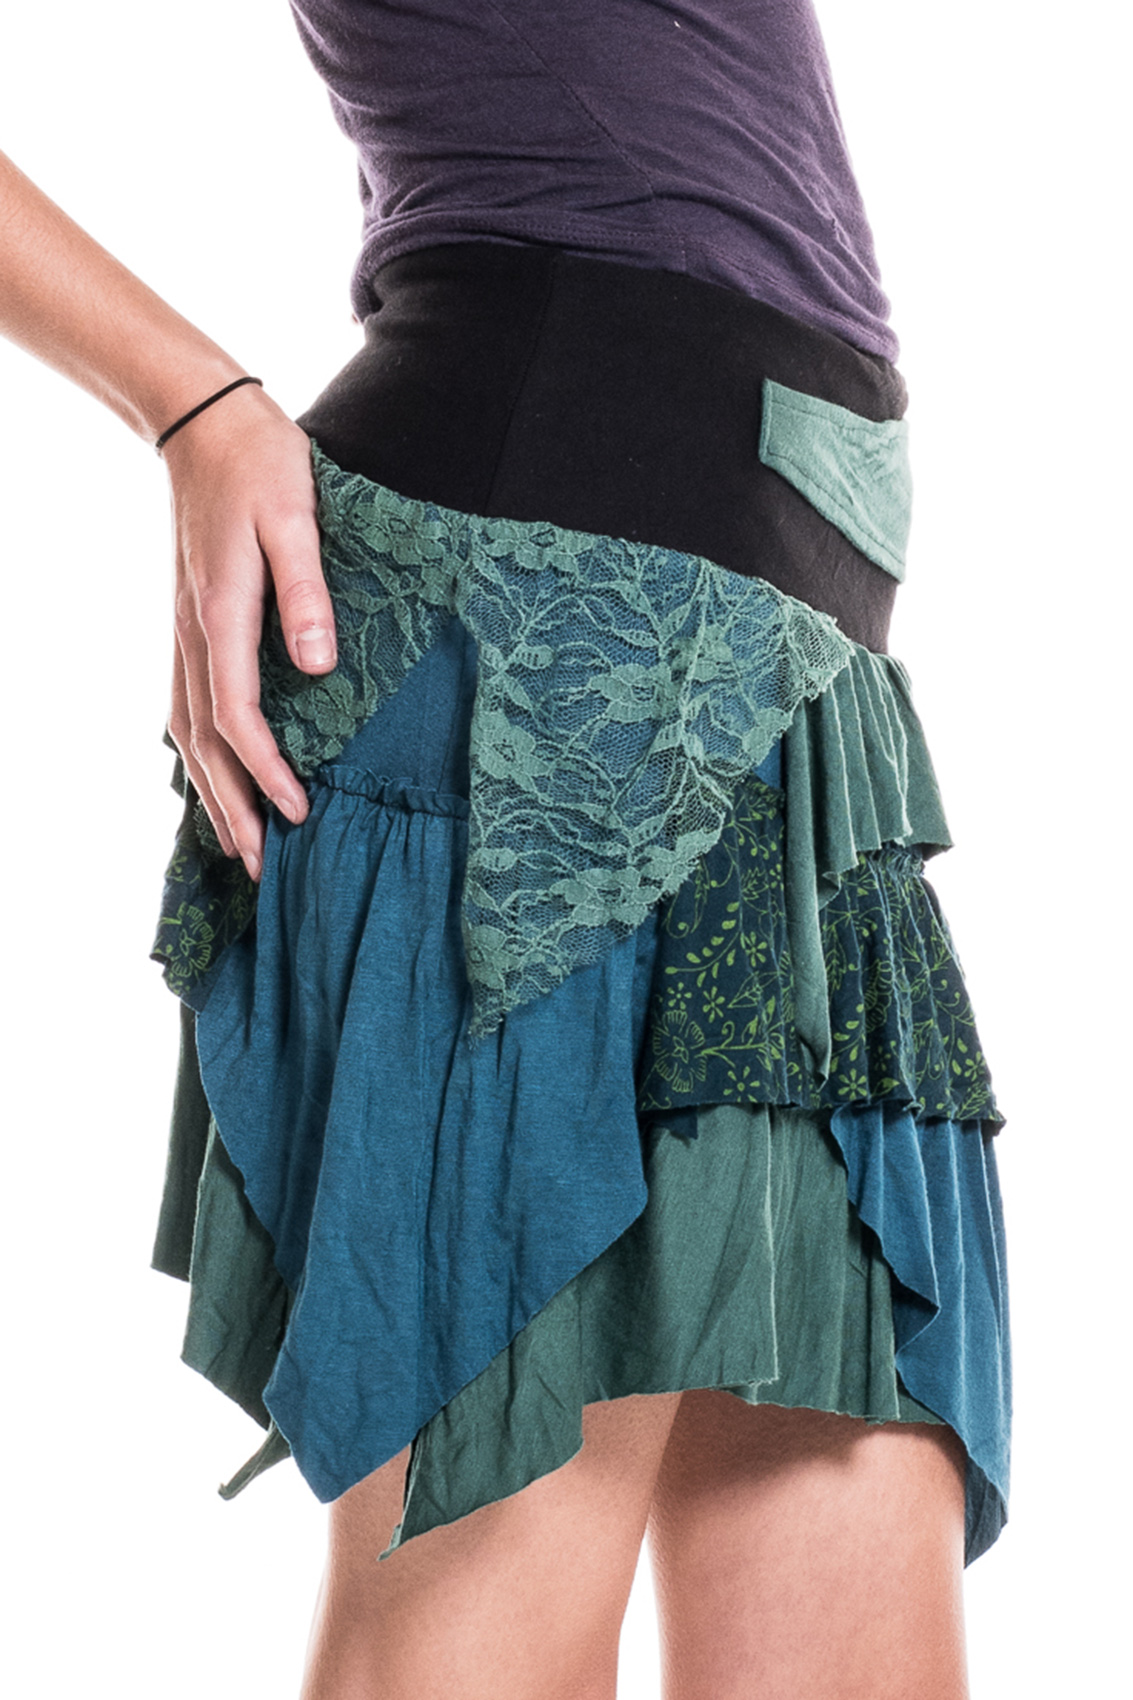 Ragged Pixie Skirt, festival fairy psy trance skirt | Altshop UK